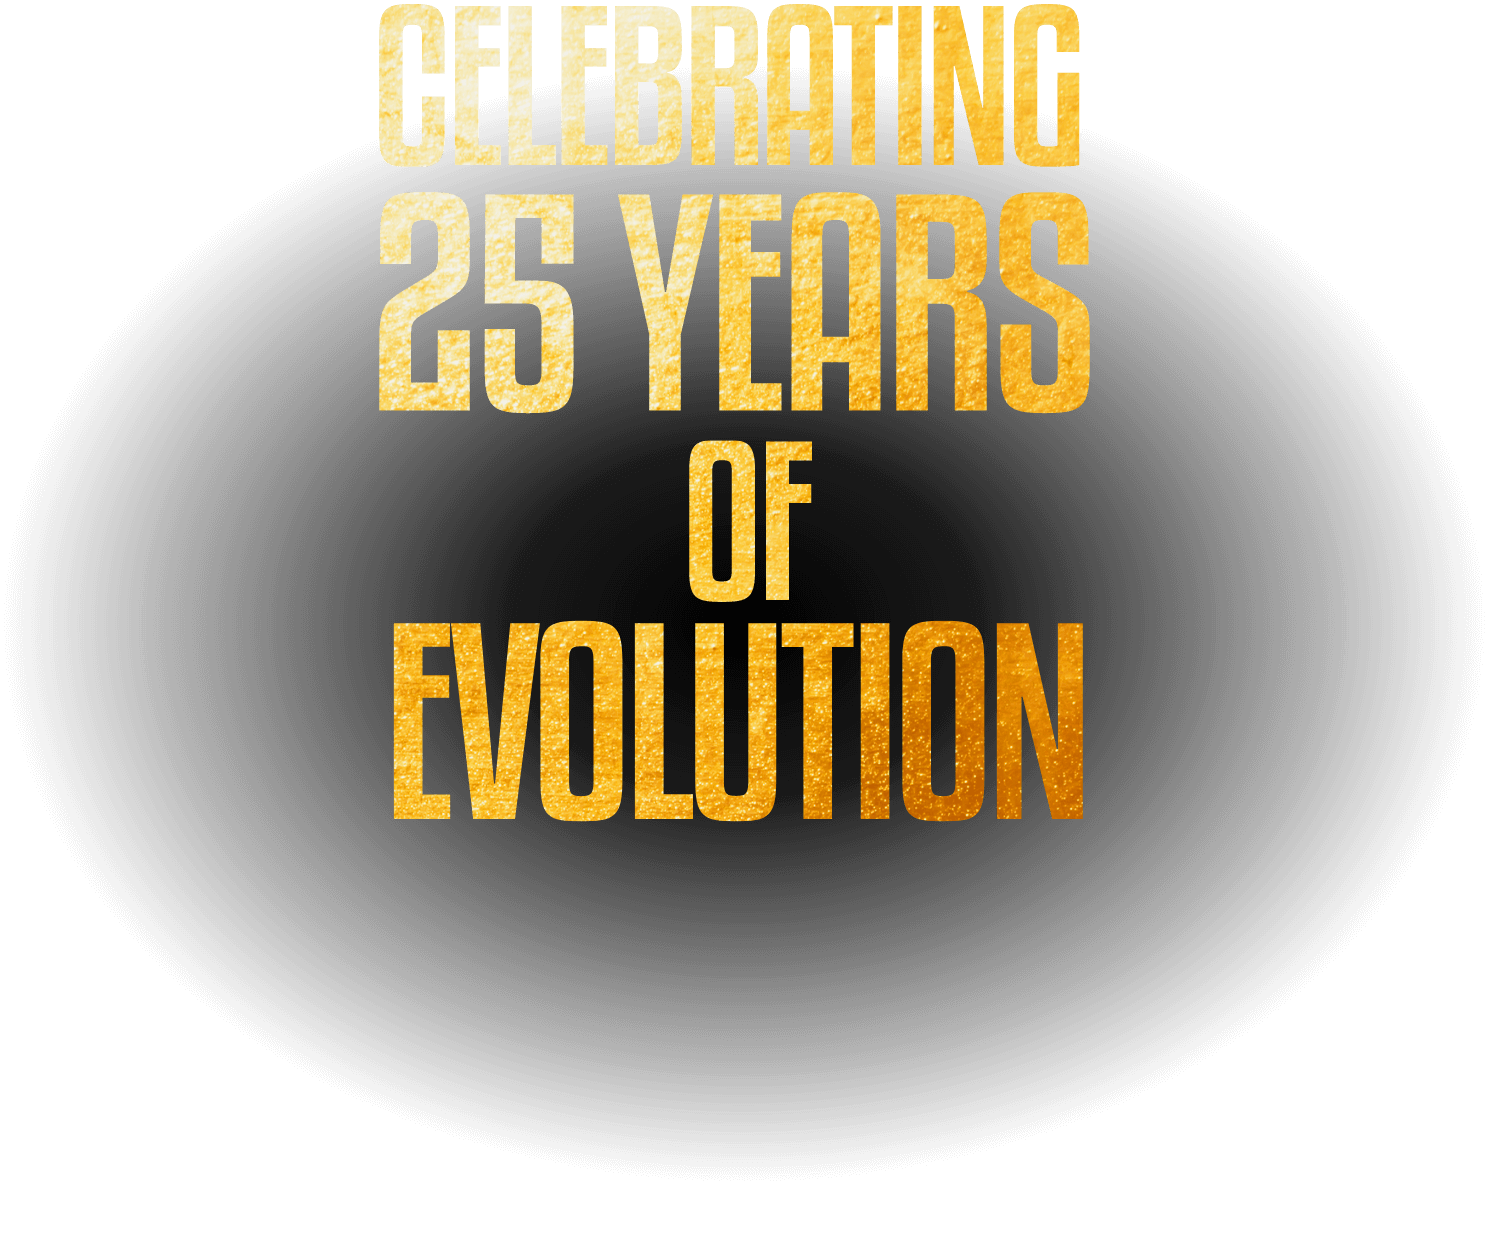 Celebrating 25 Years of Evolution